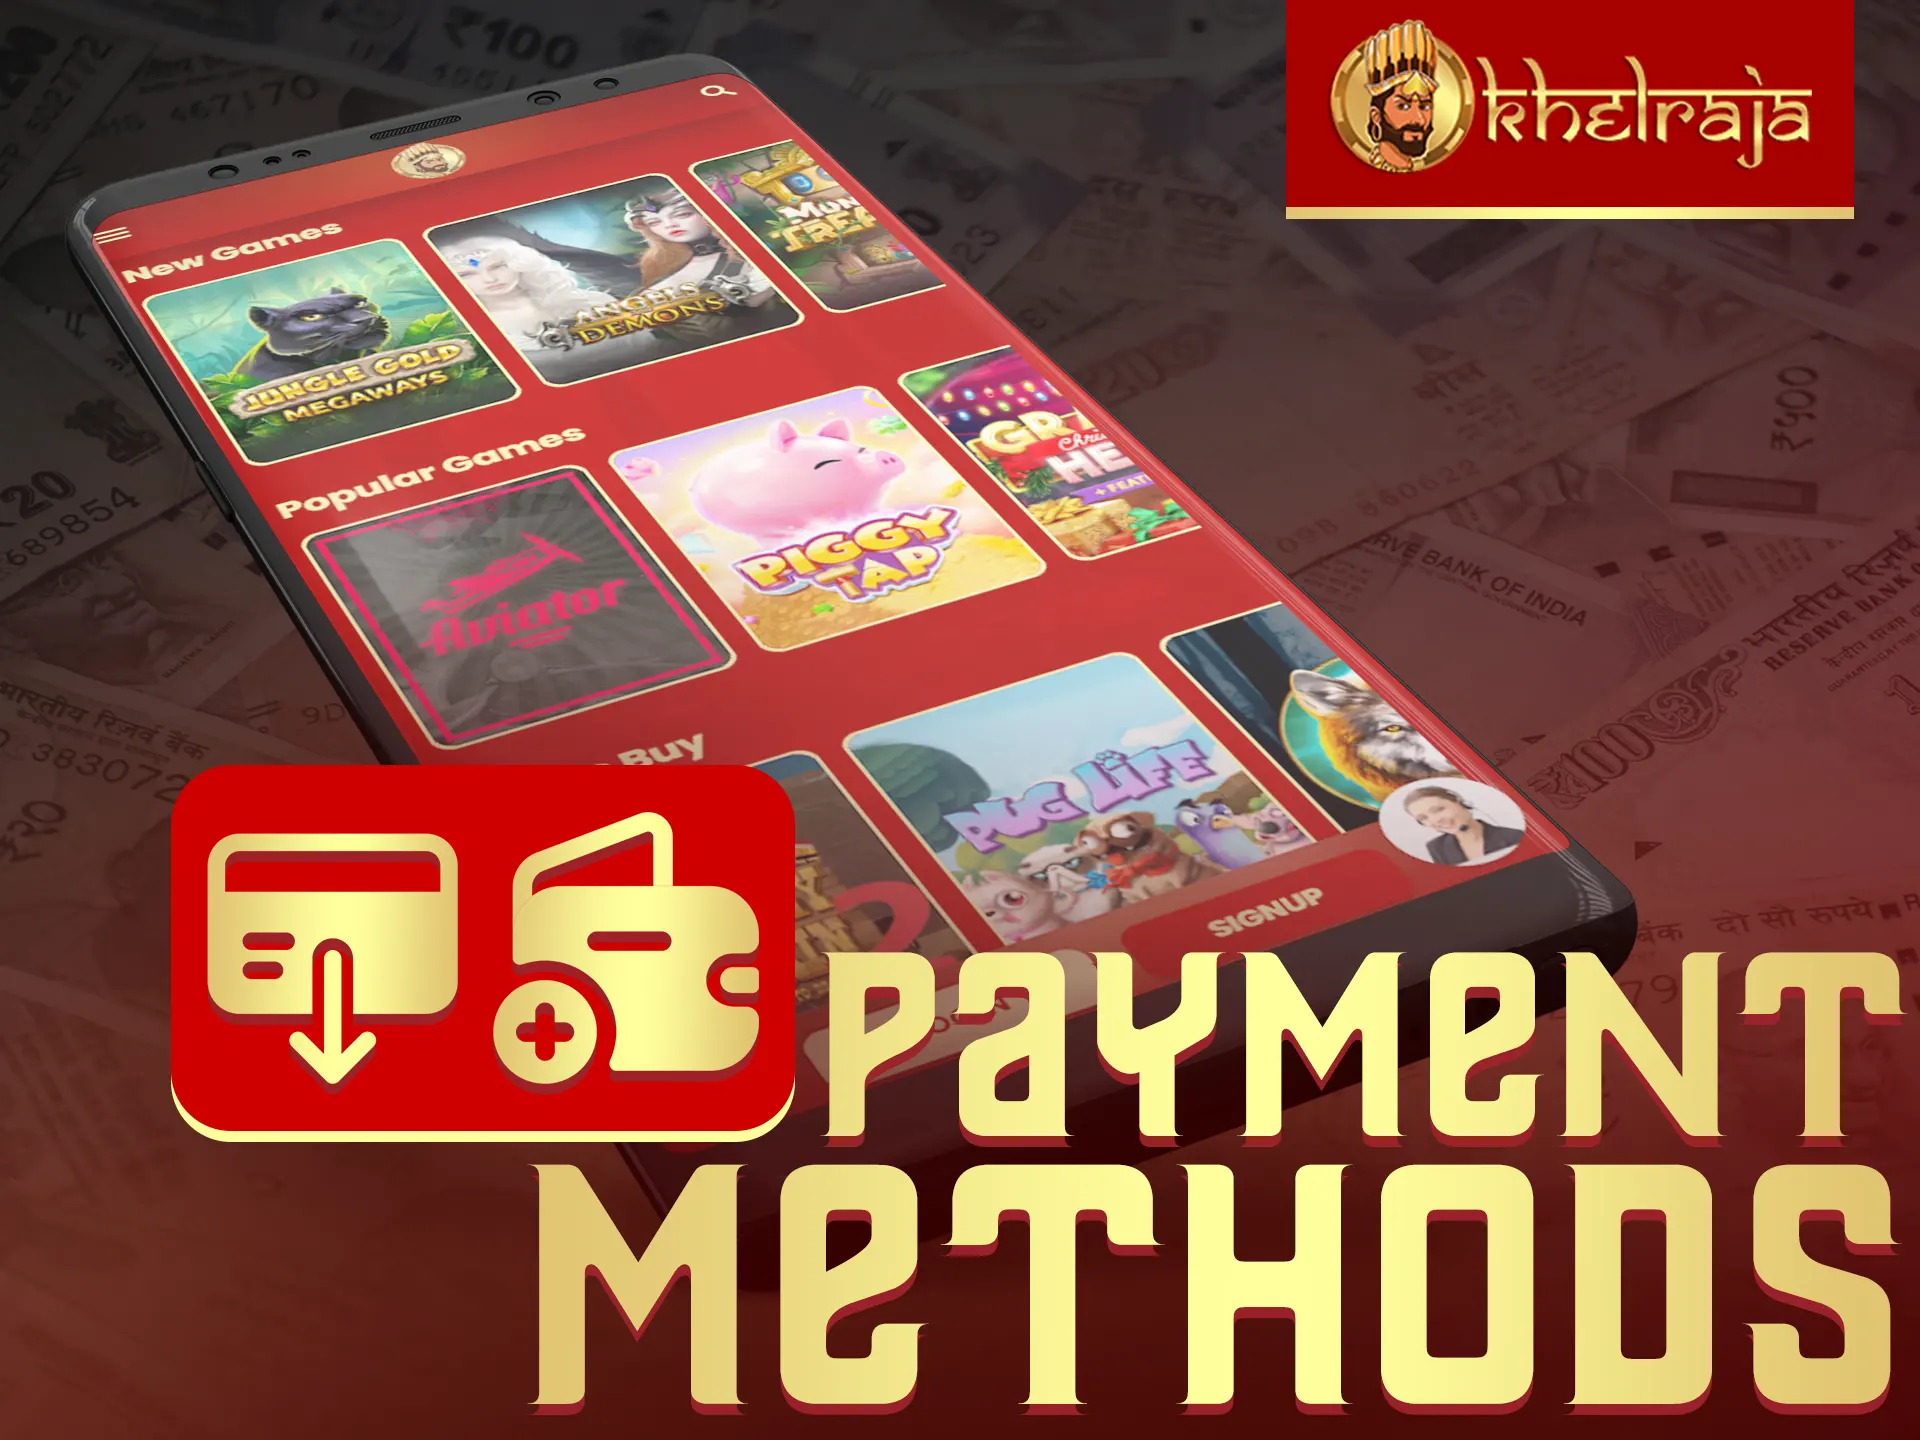 Khelraja Casino app offers secure payment methods.